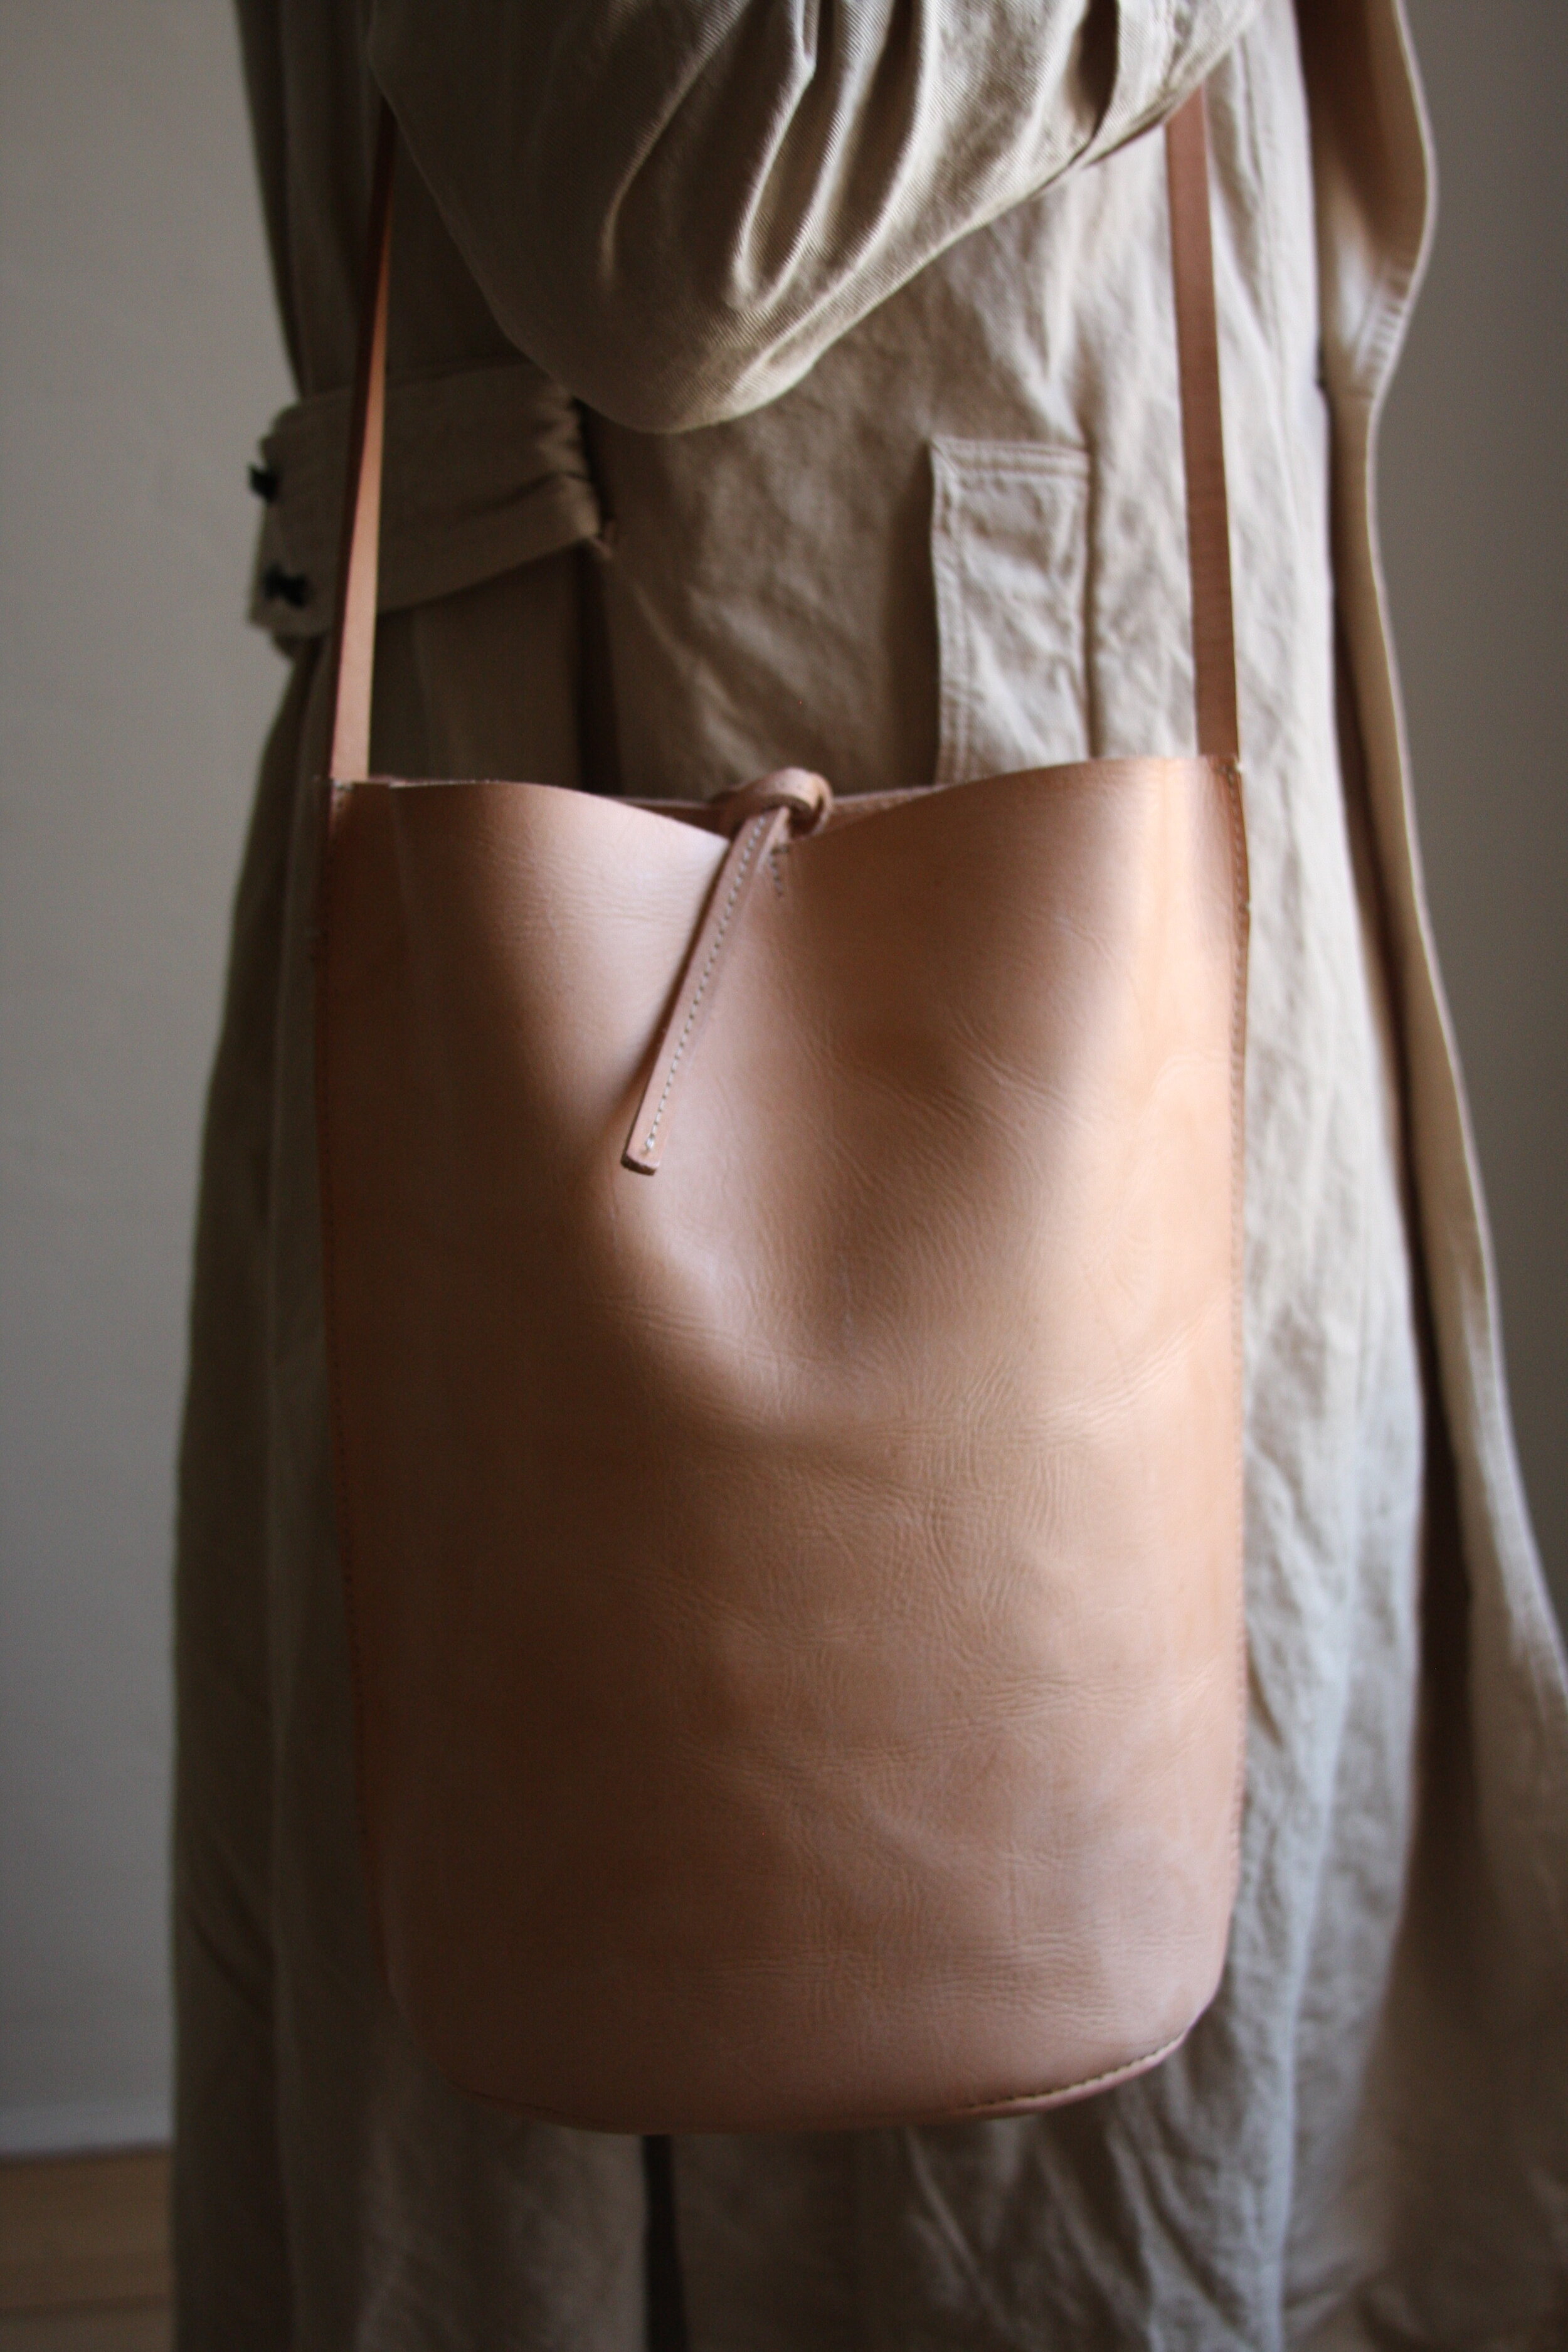 NURAXI by Teresa Robinson — Crossbody Bucket Bag - Natural Leather